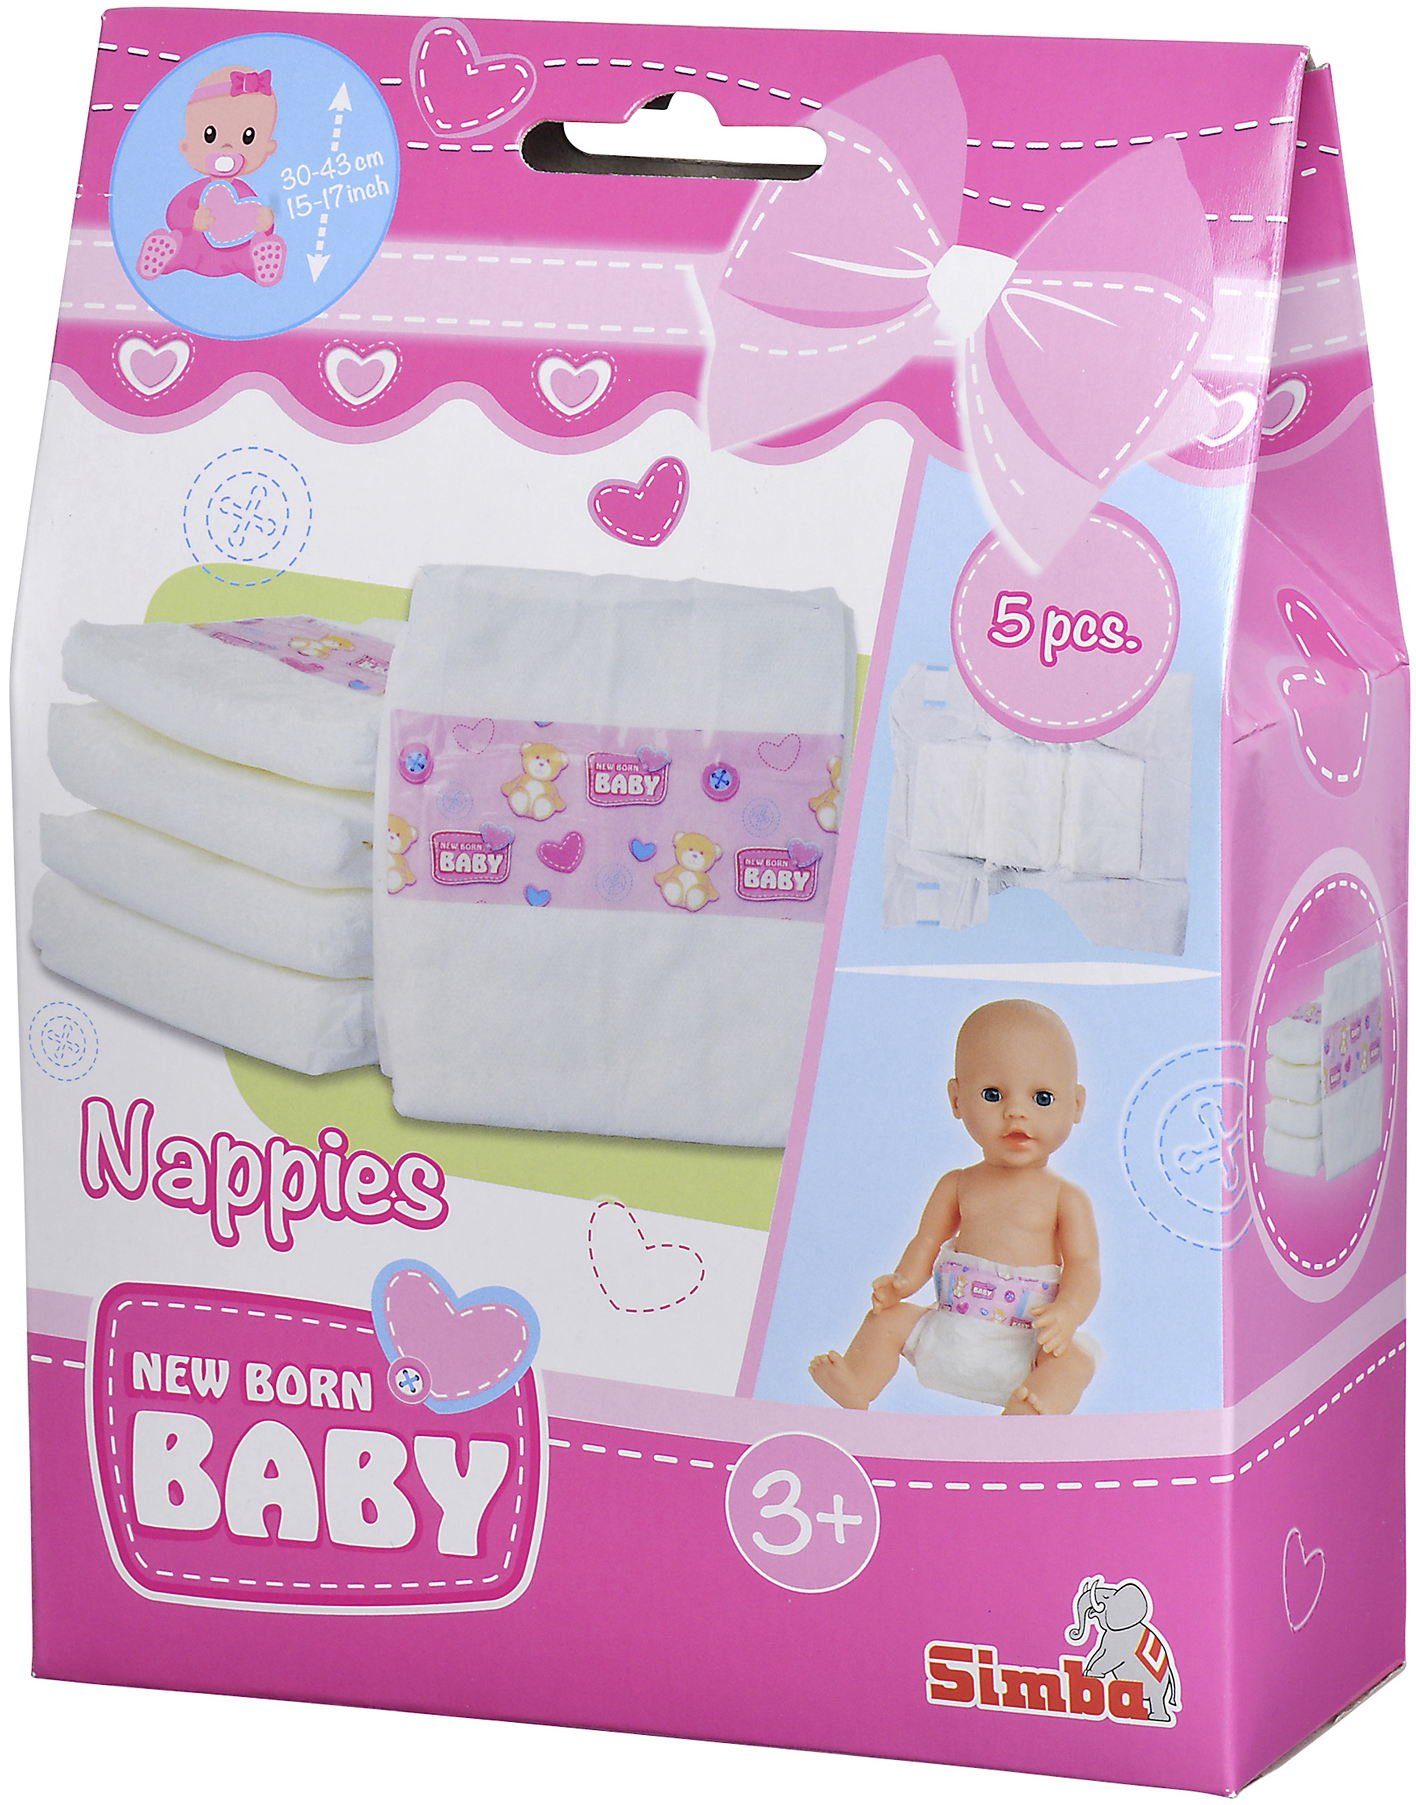 SIMBA Babypuppe Puppe Zubehör - New Born 105560019 Puppen 5 alle 43 38 Windeln cm Baby